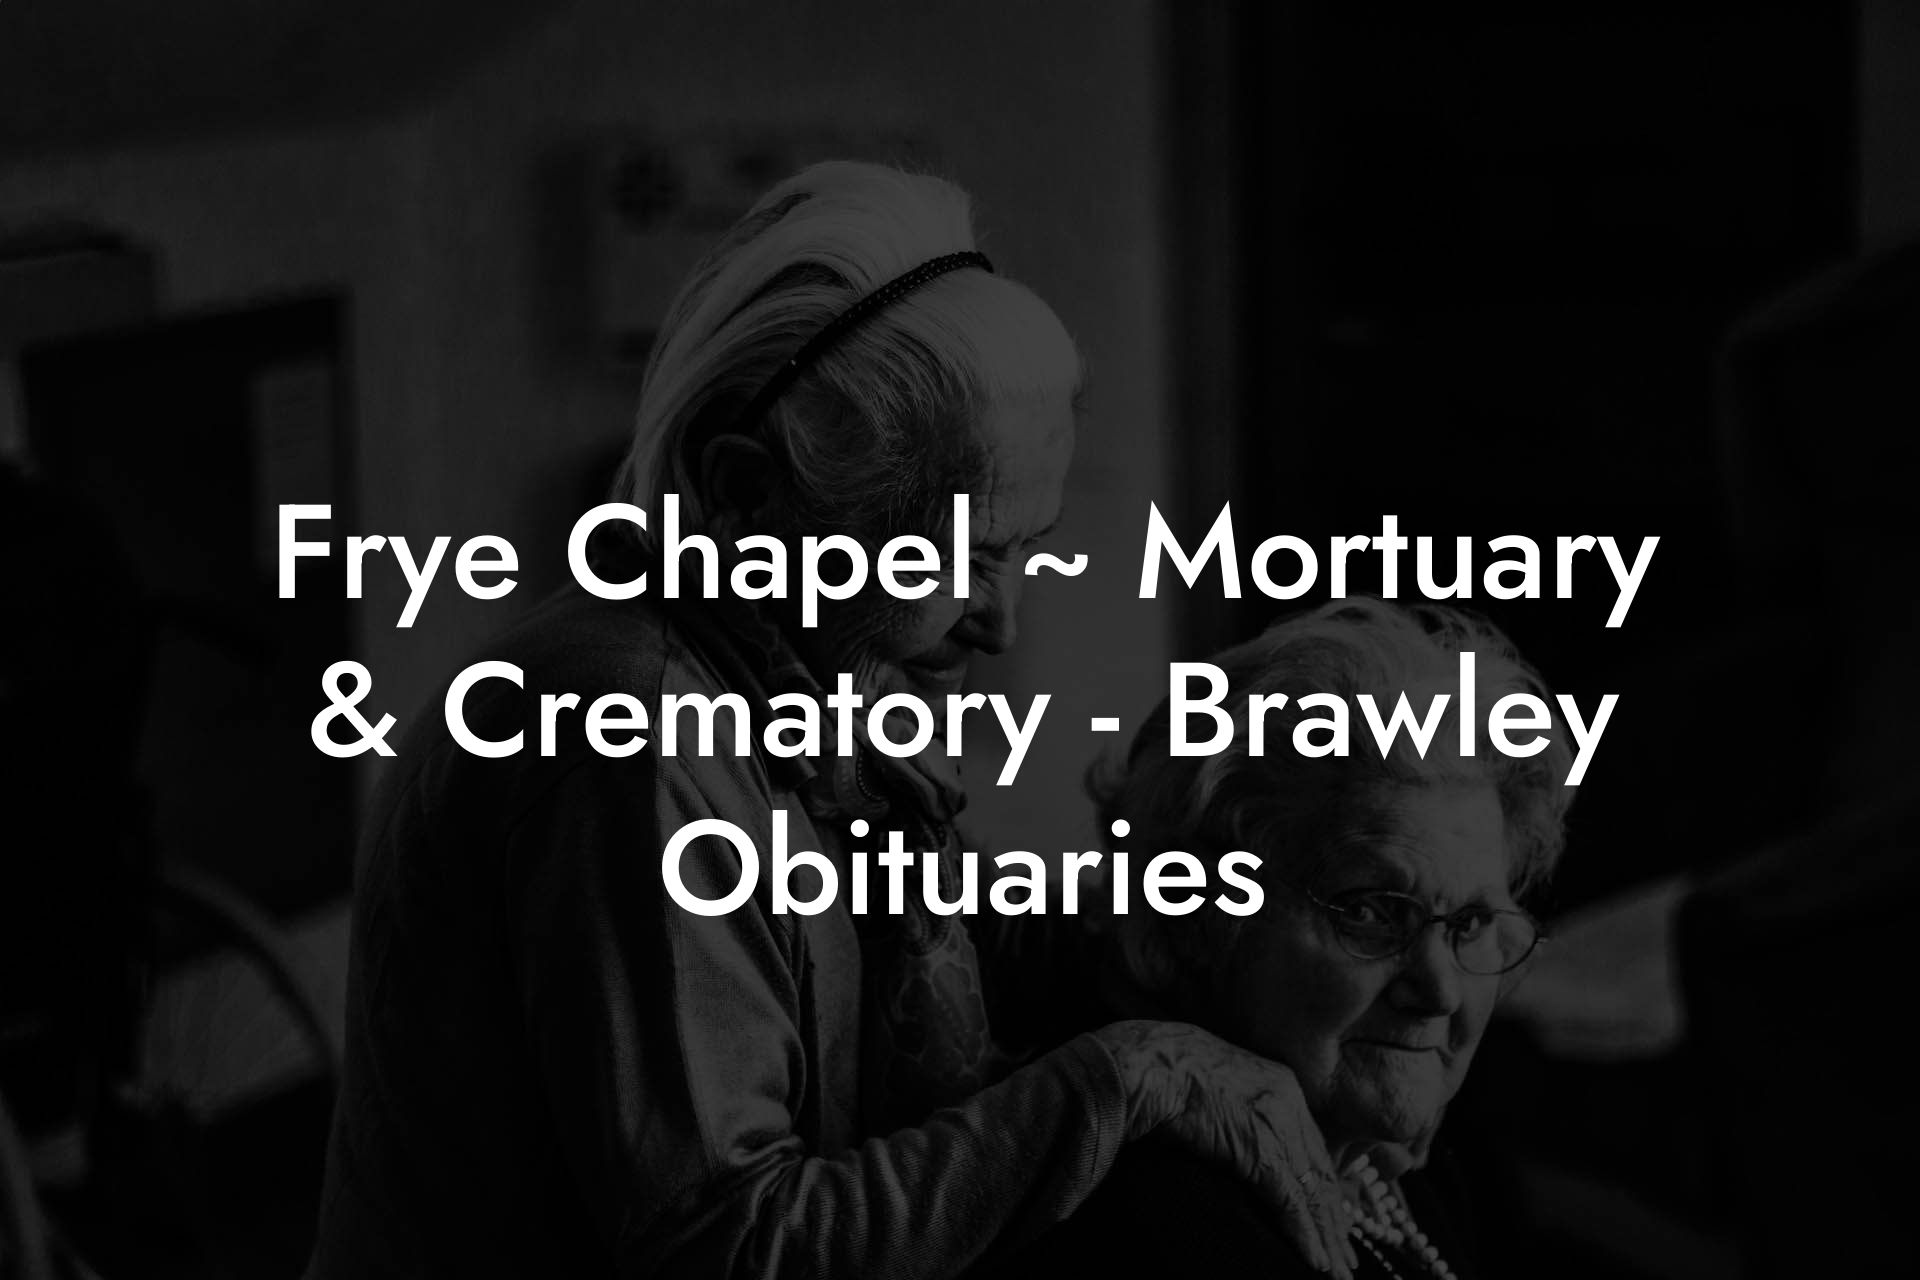 Frye Chapel ~ Mortuary & Crematory - Brawley Obituaries